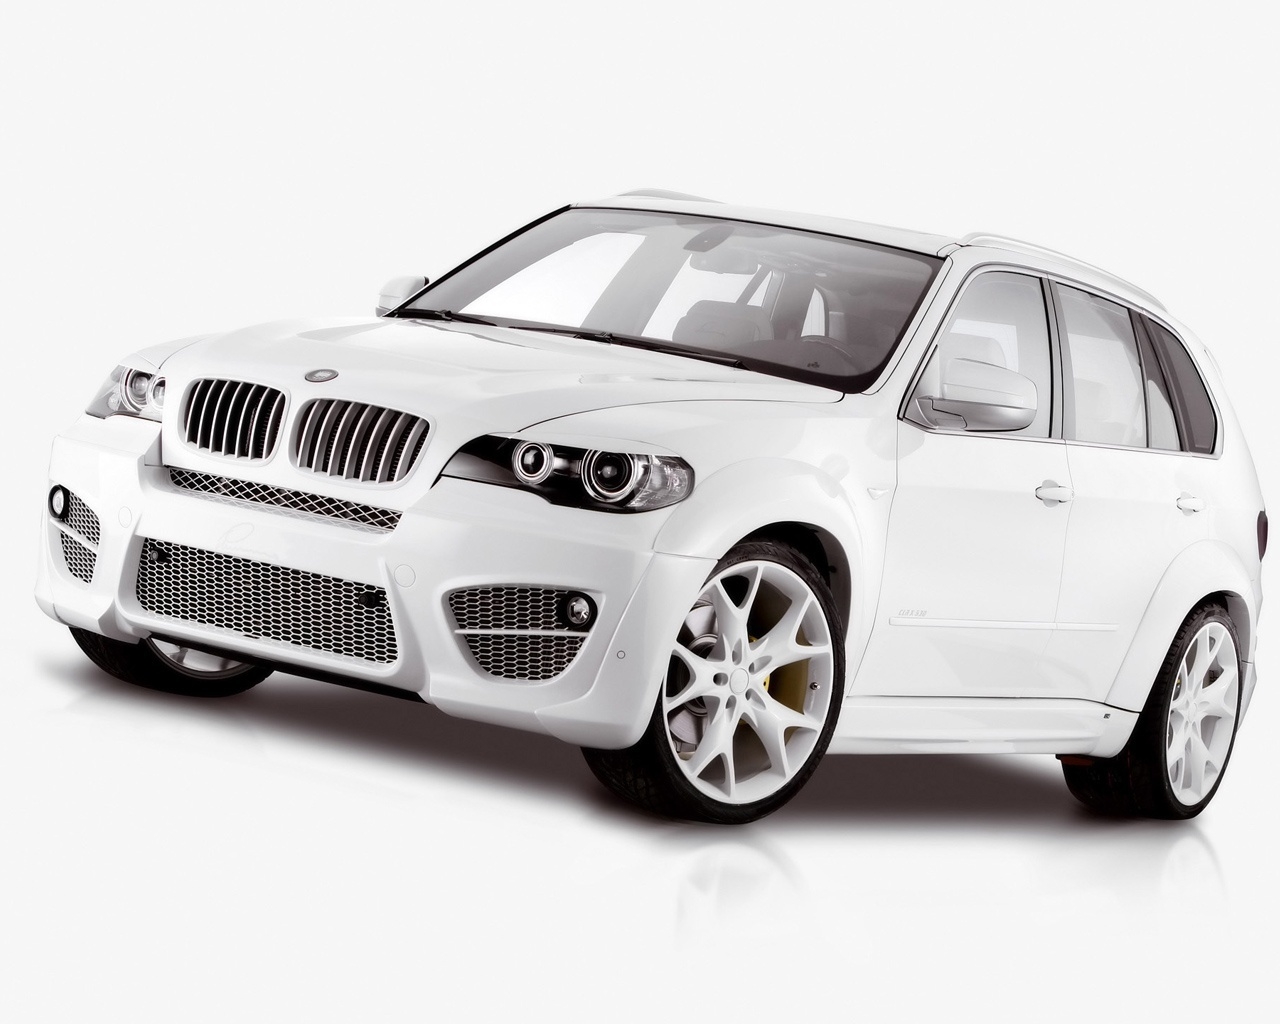 BMW CLR X530 Lumma Design 2008 for 1280 x 1024 resolution